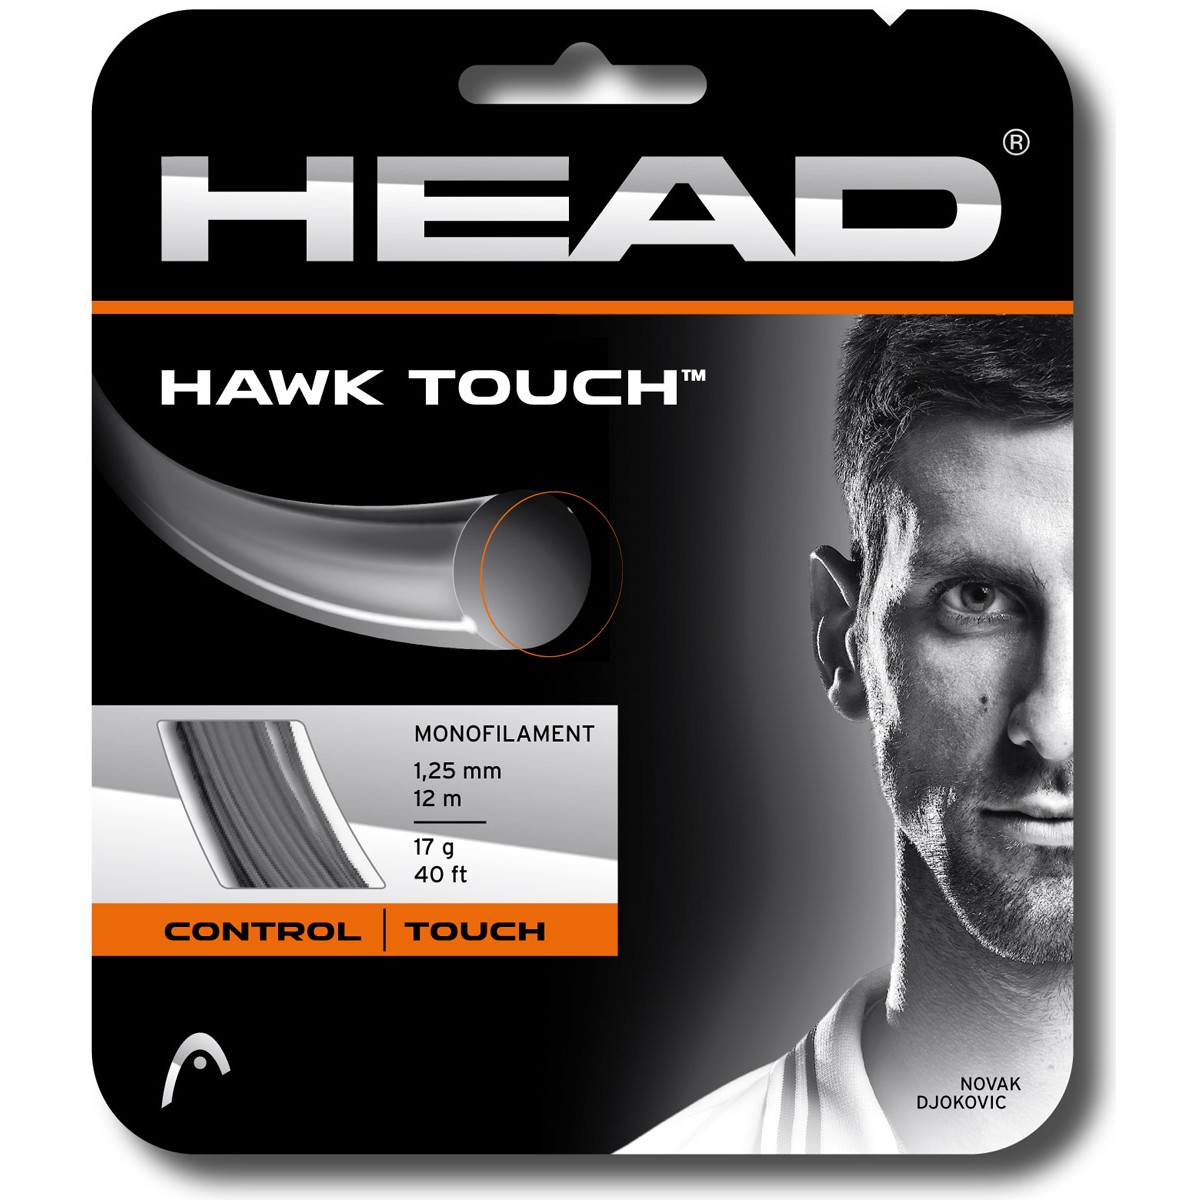 Head hawk Touch